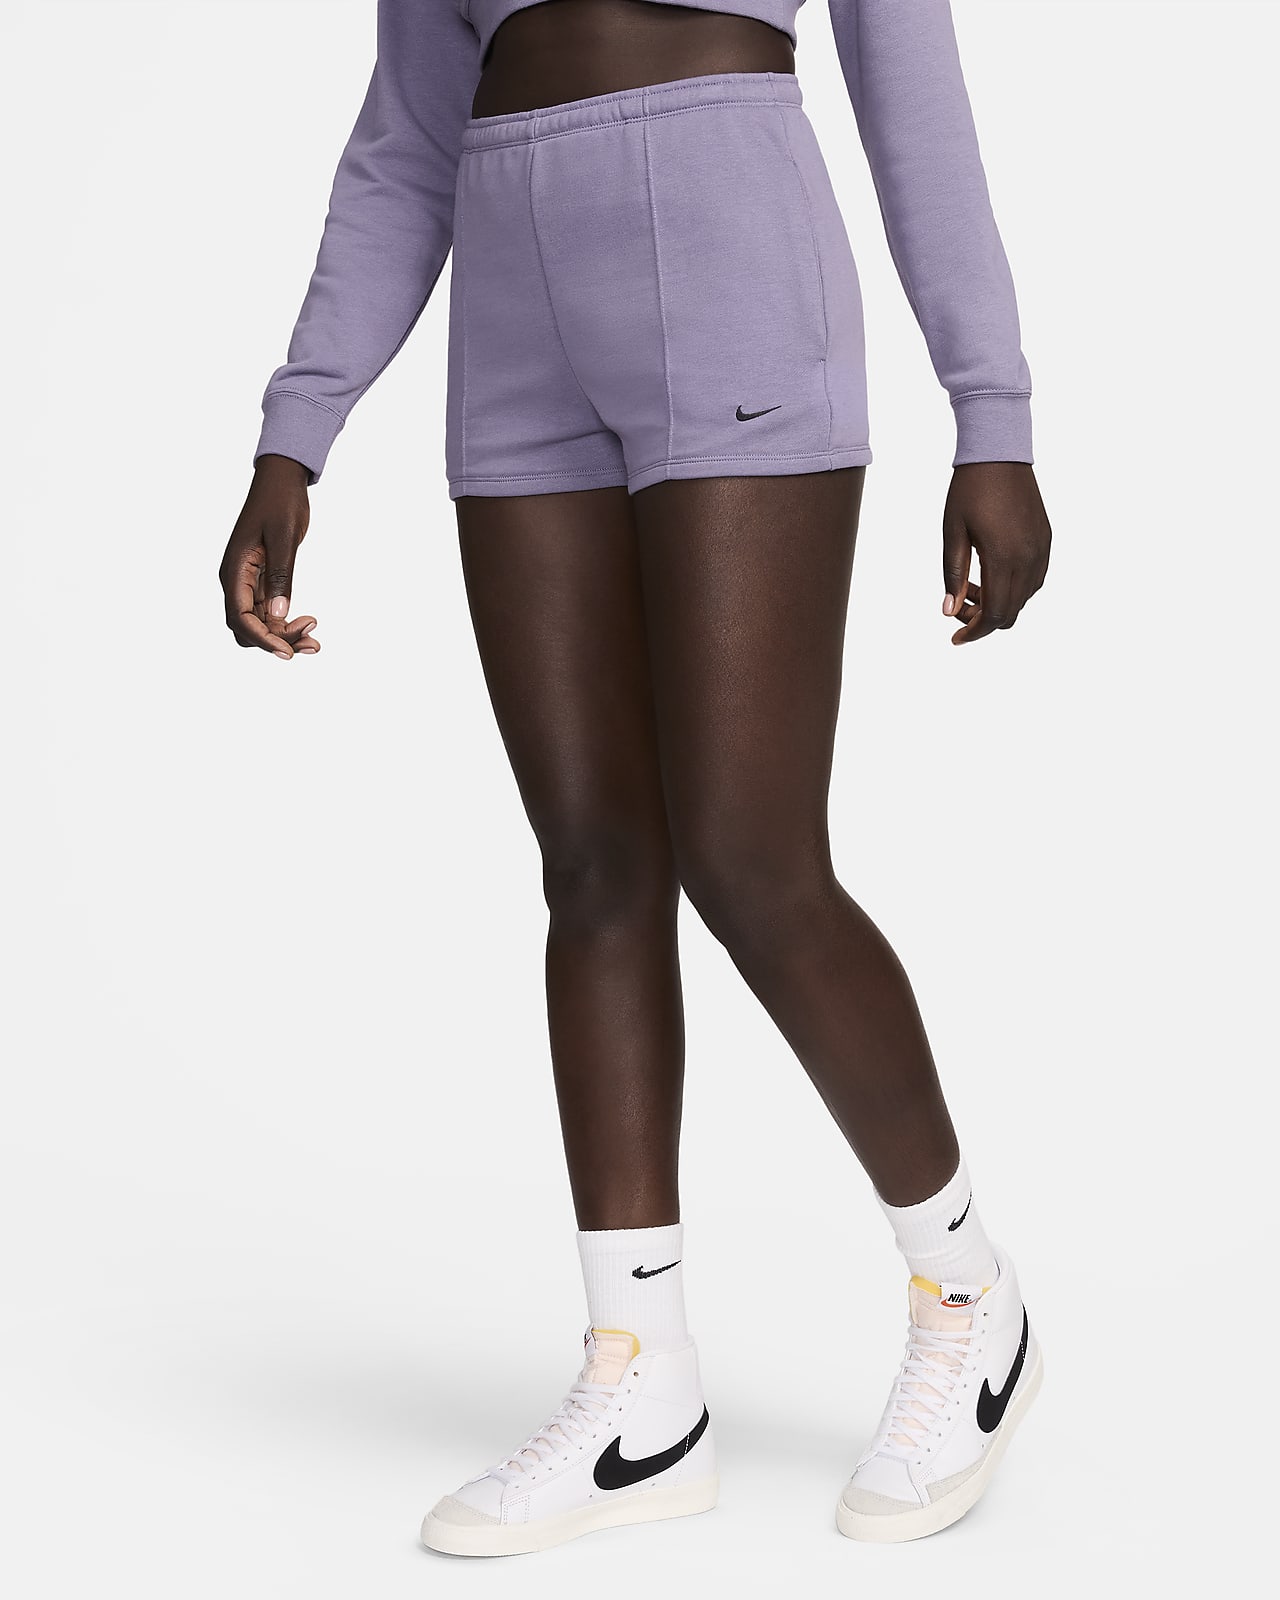 Højtaljede slanke Nike Sportswear Chill Terry-shorts (5 cm) i french terry til kvinder